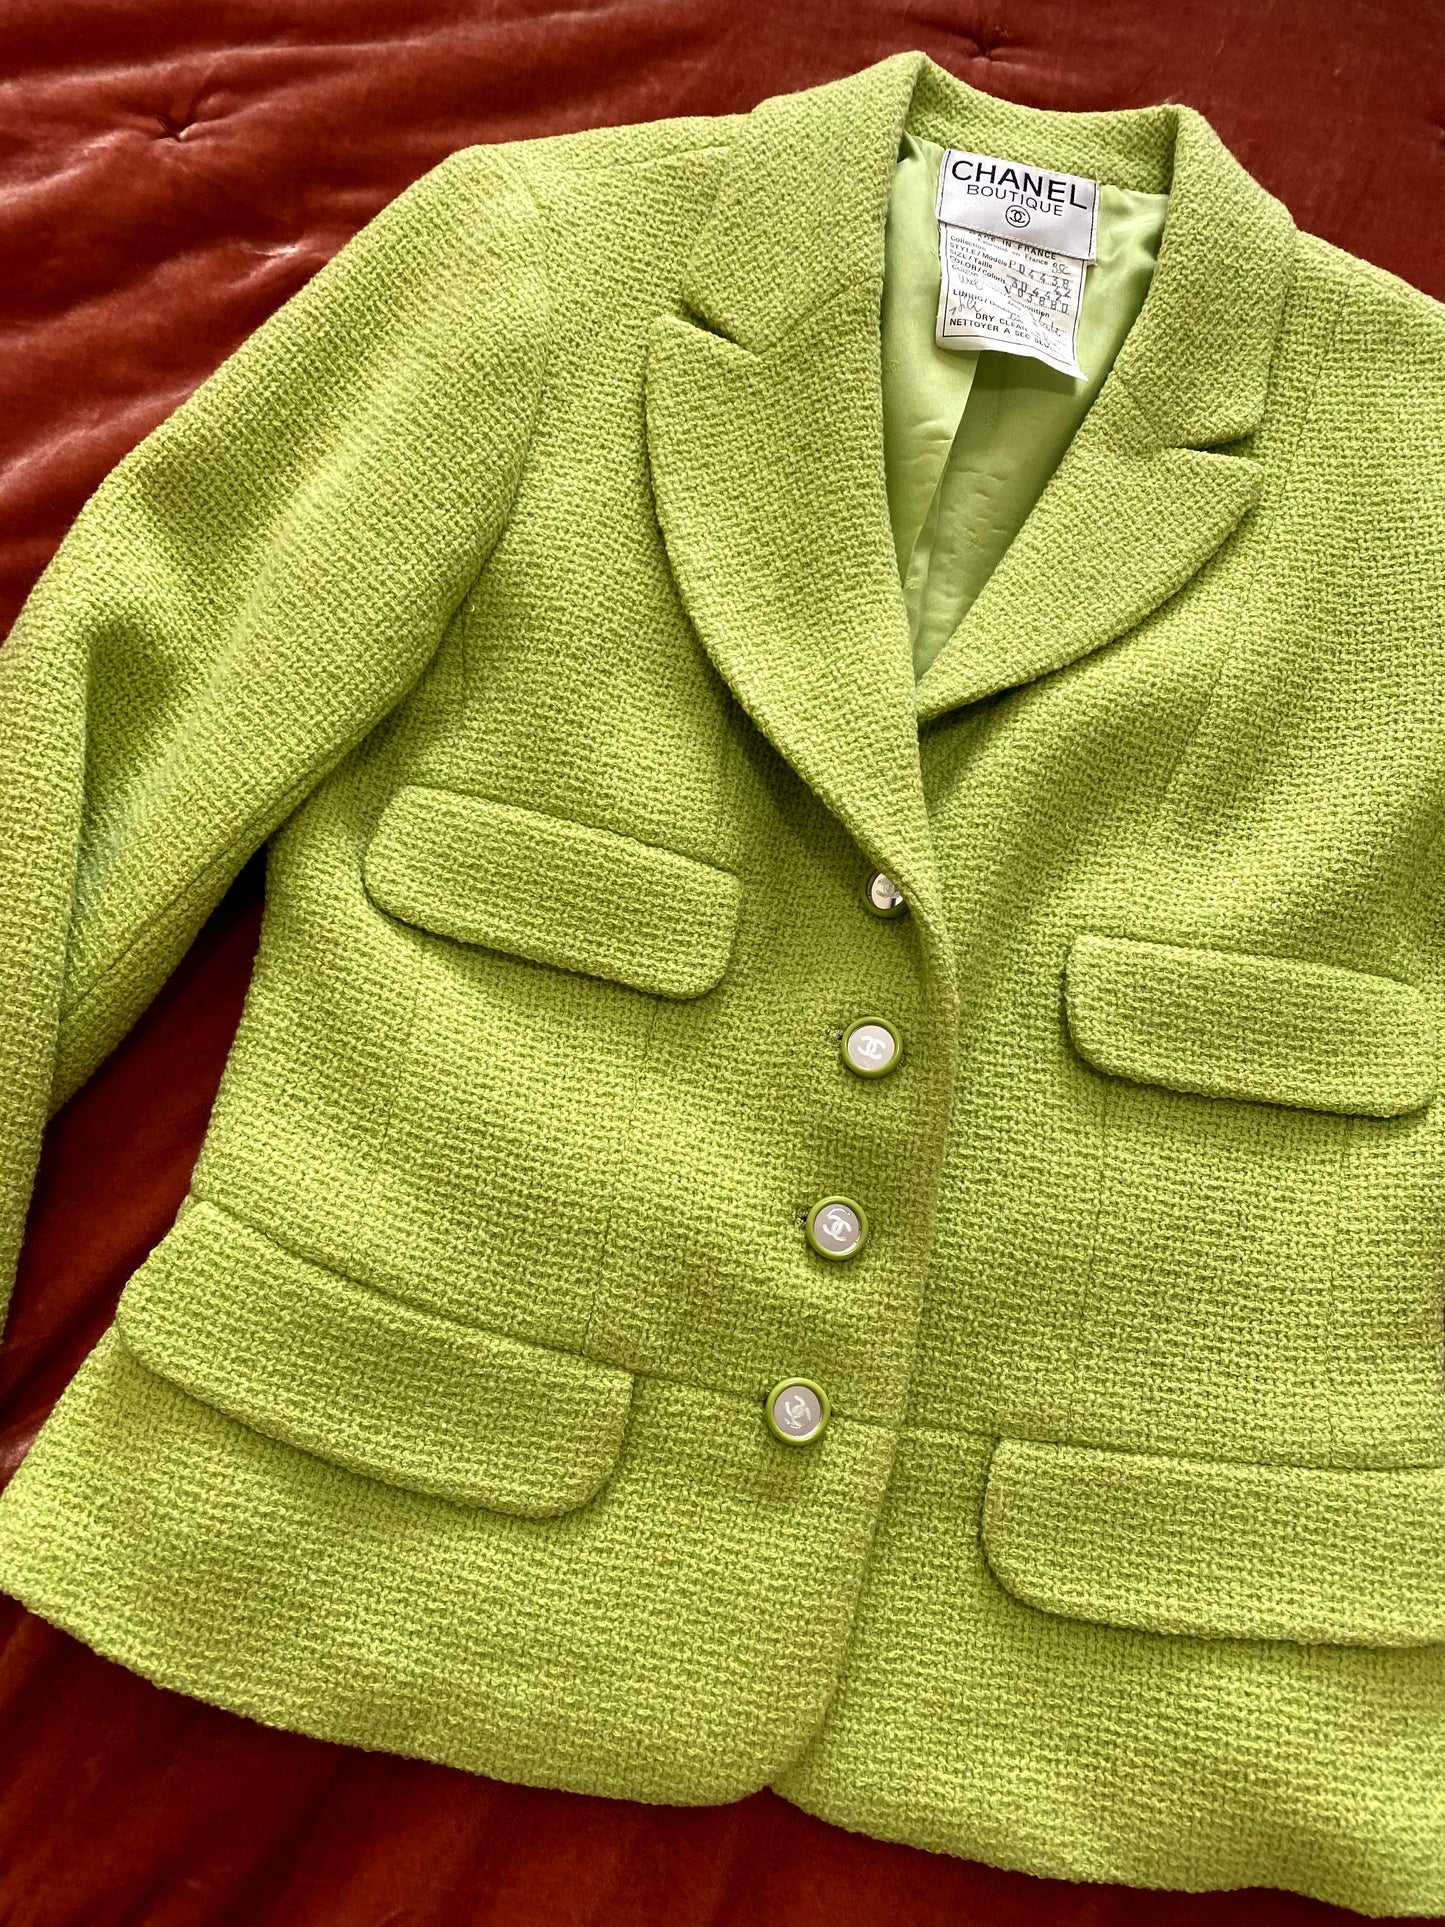 Vintage Chanel Tweed Jacket - Lime Green